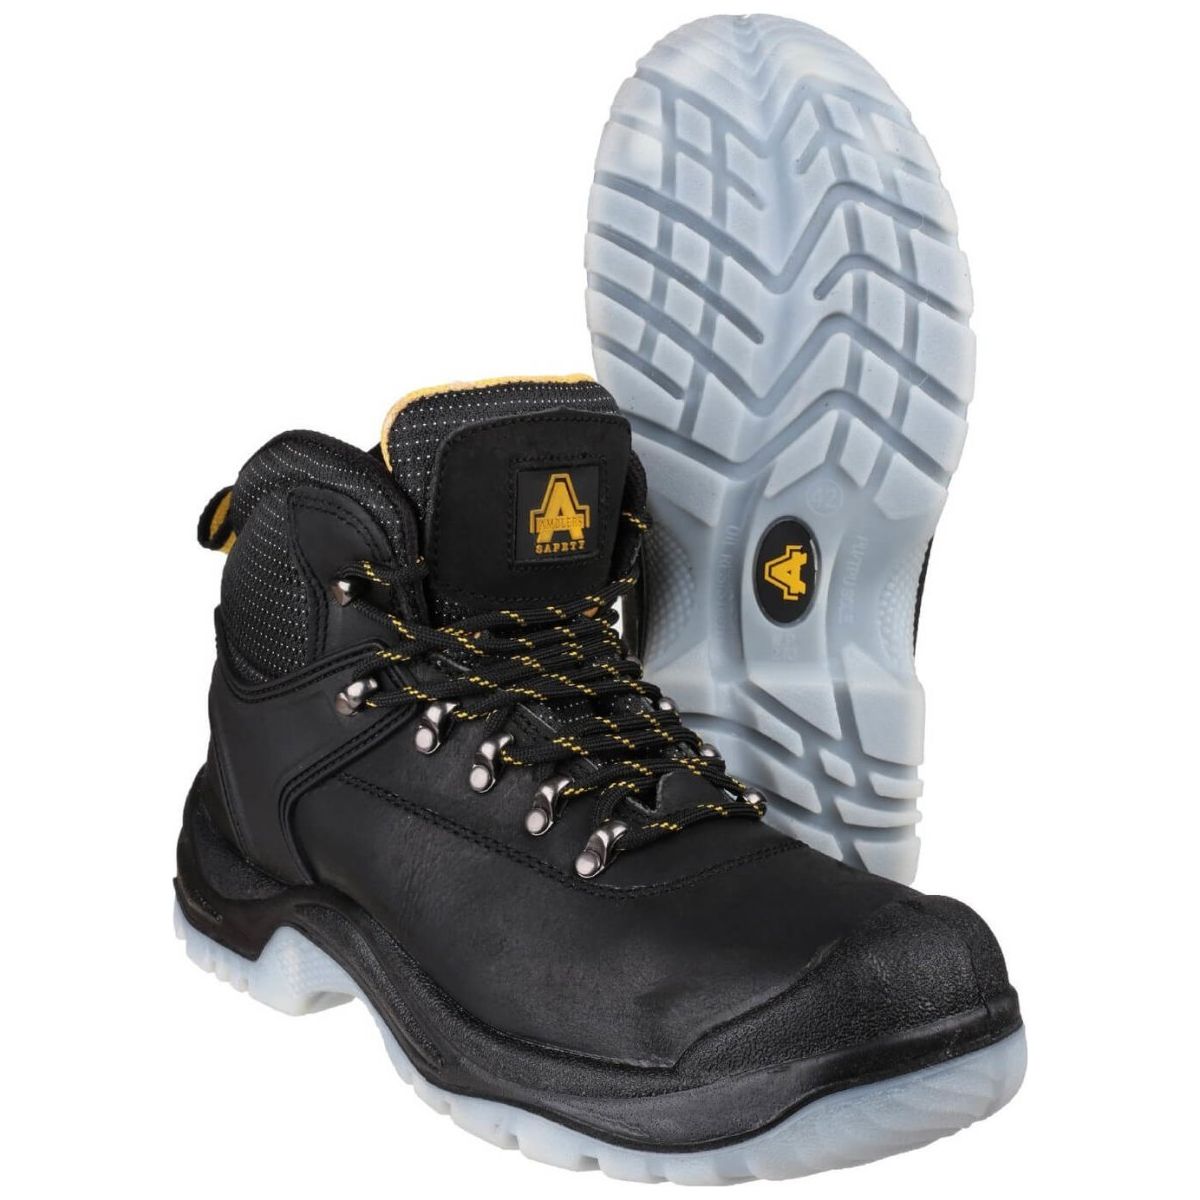 Amblers Fs199 Antistatic Hiking Safety Boots Mens - workweargurus.com